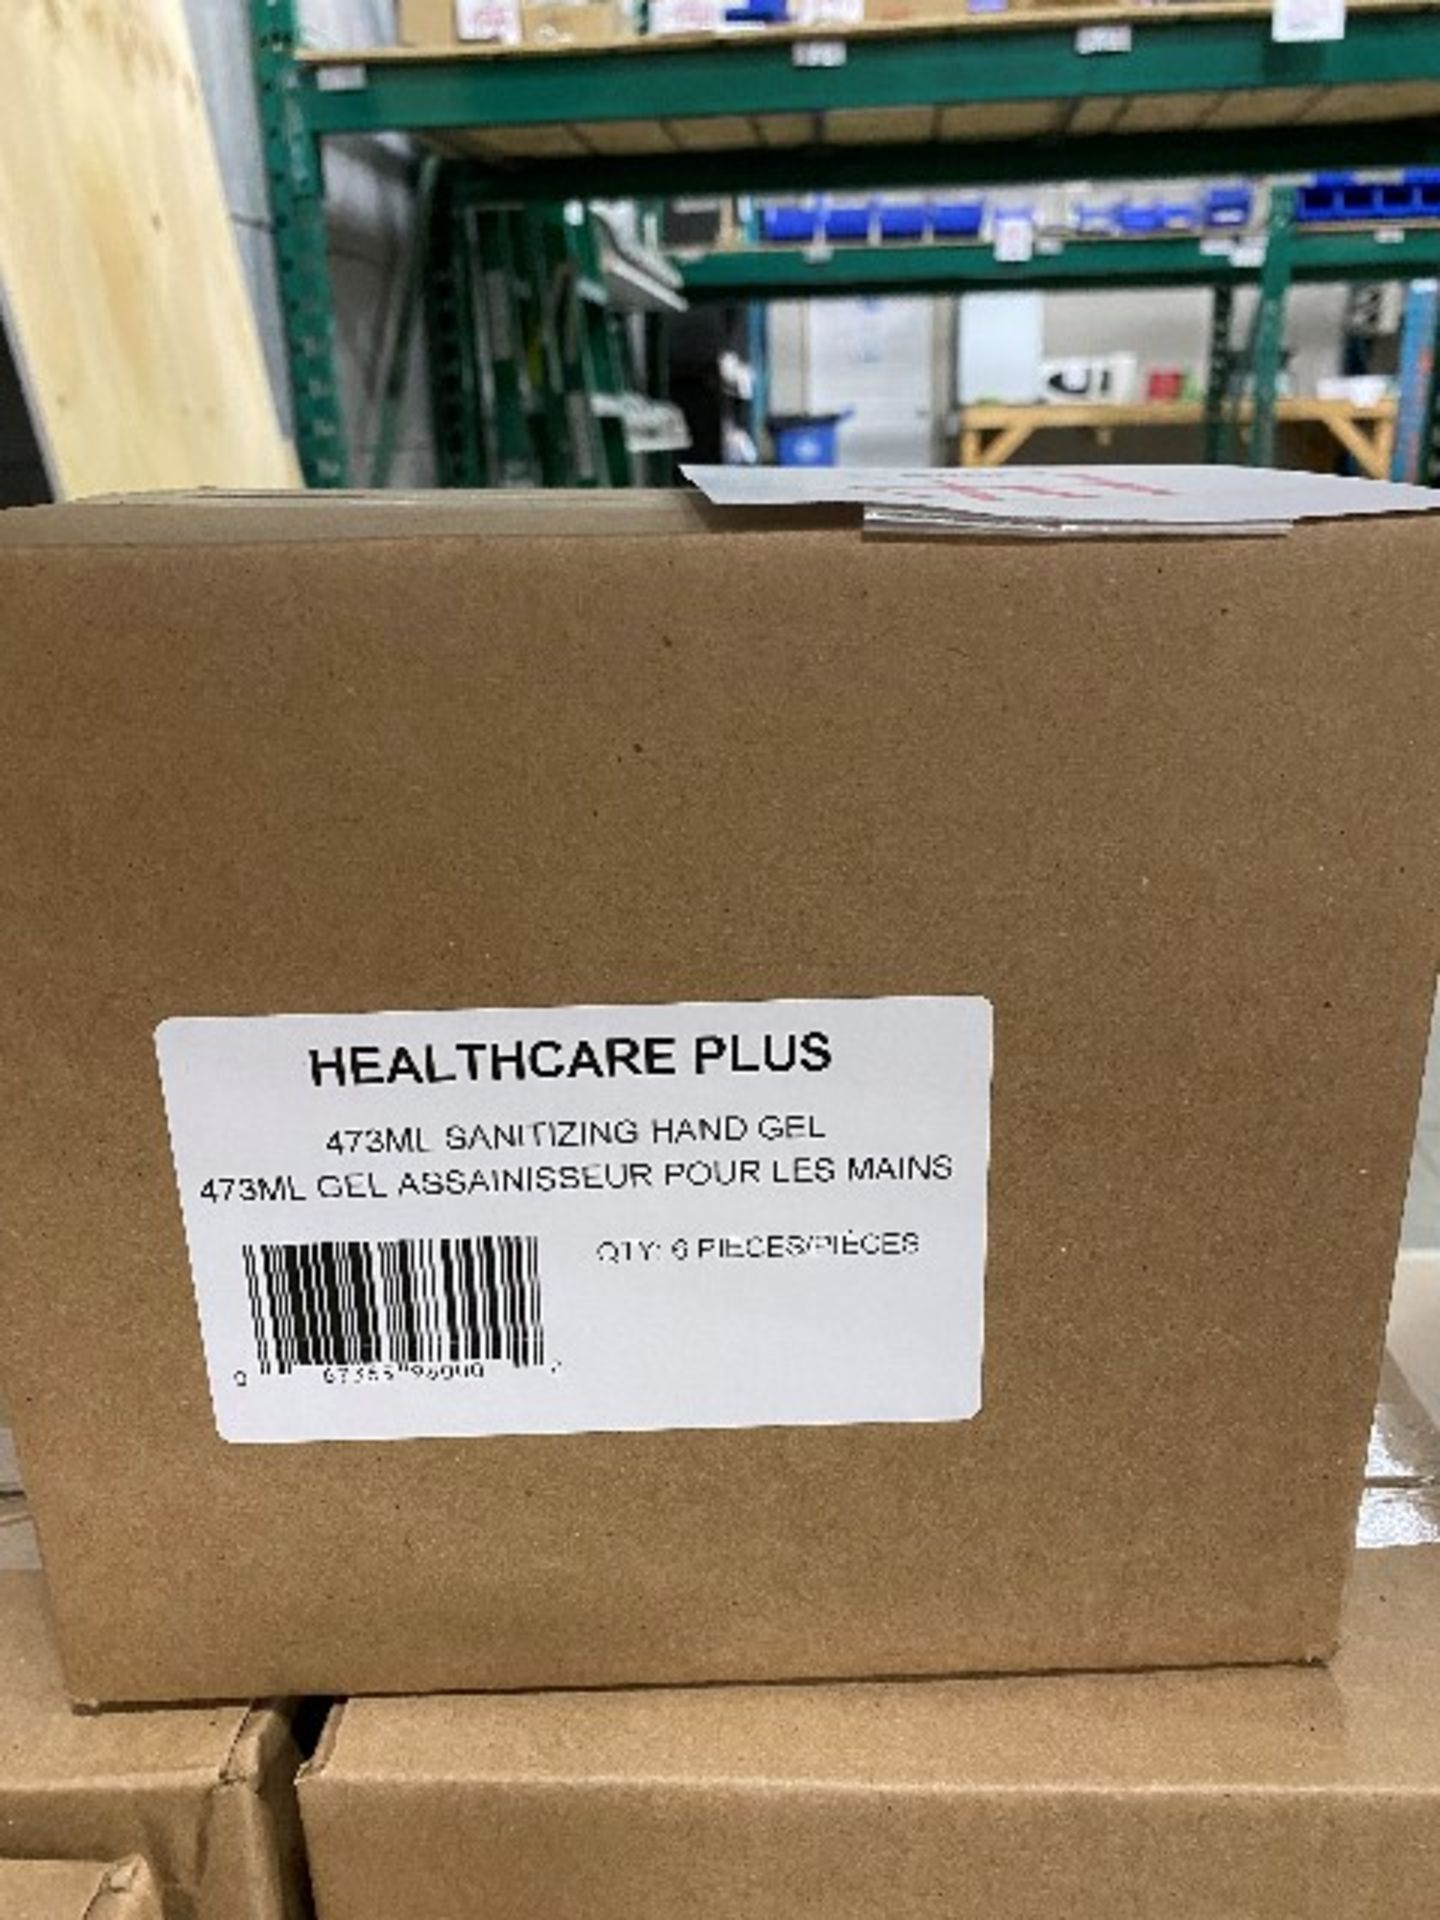 Healthcare Plus sanitizing hand gel, 6pcs per box, 11 boxes - Image 2 of 2